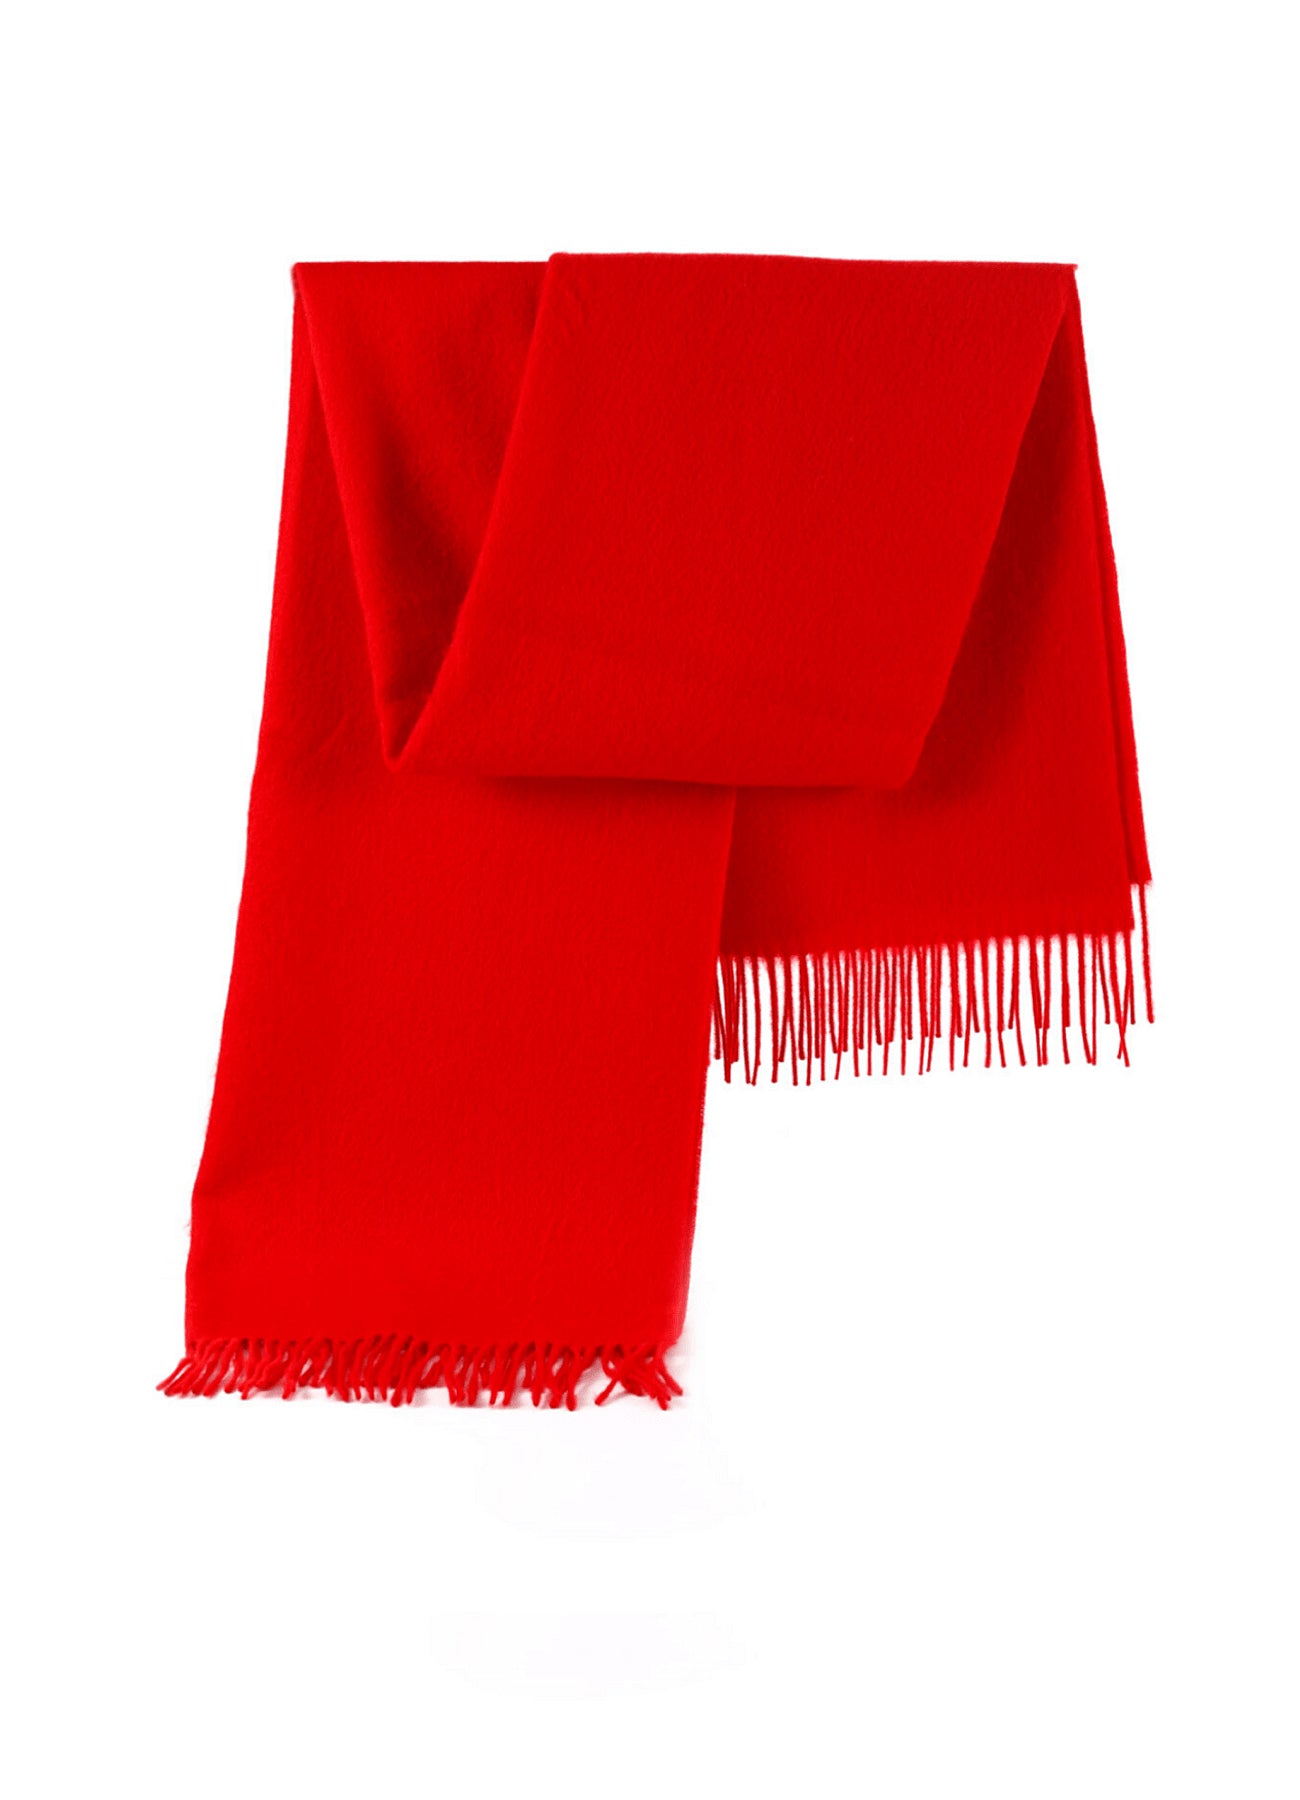 Red Blanket 100% Pure Lambs wool Scottish Throw